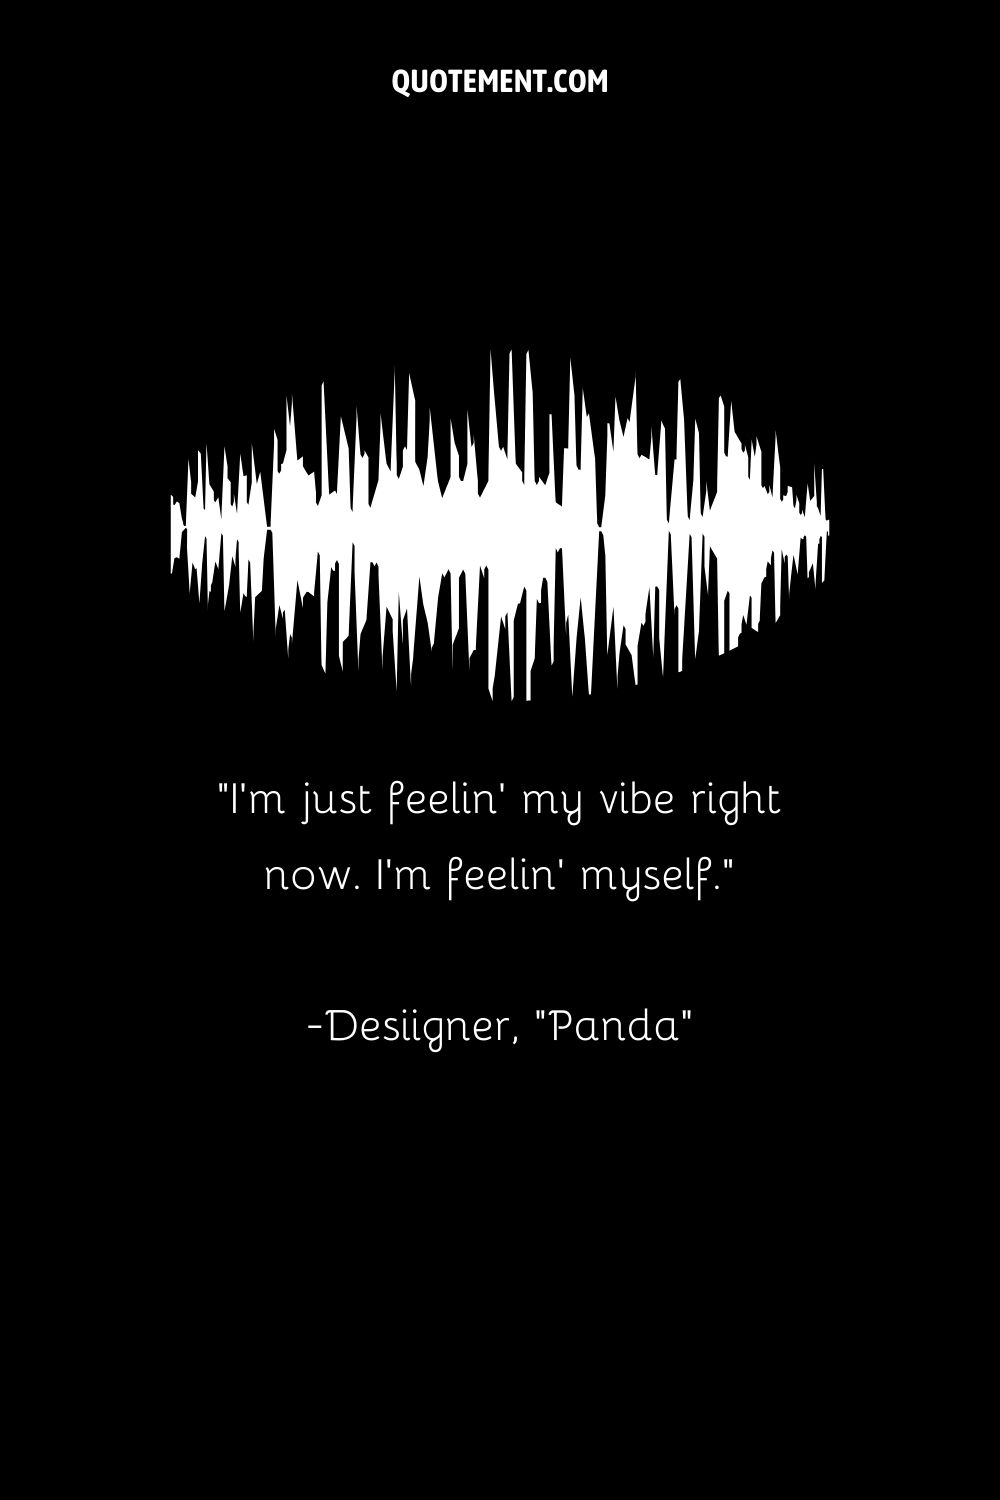 “I’m just feelin’ my vibe right now. I’m feelin’ myself.” — Desiigner, “Panda”